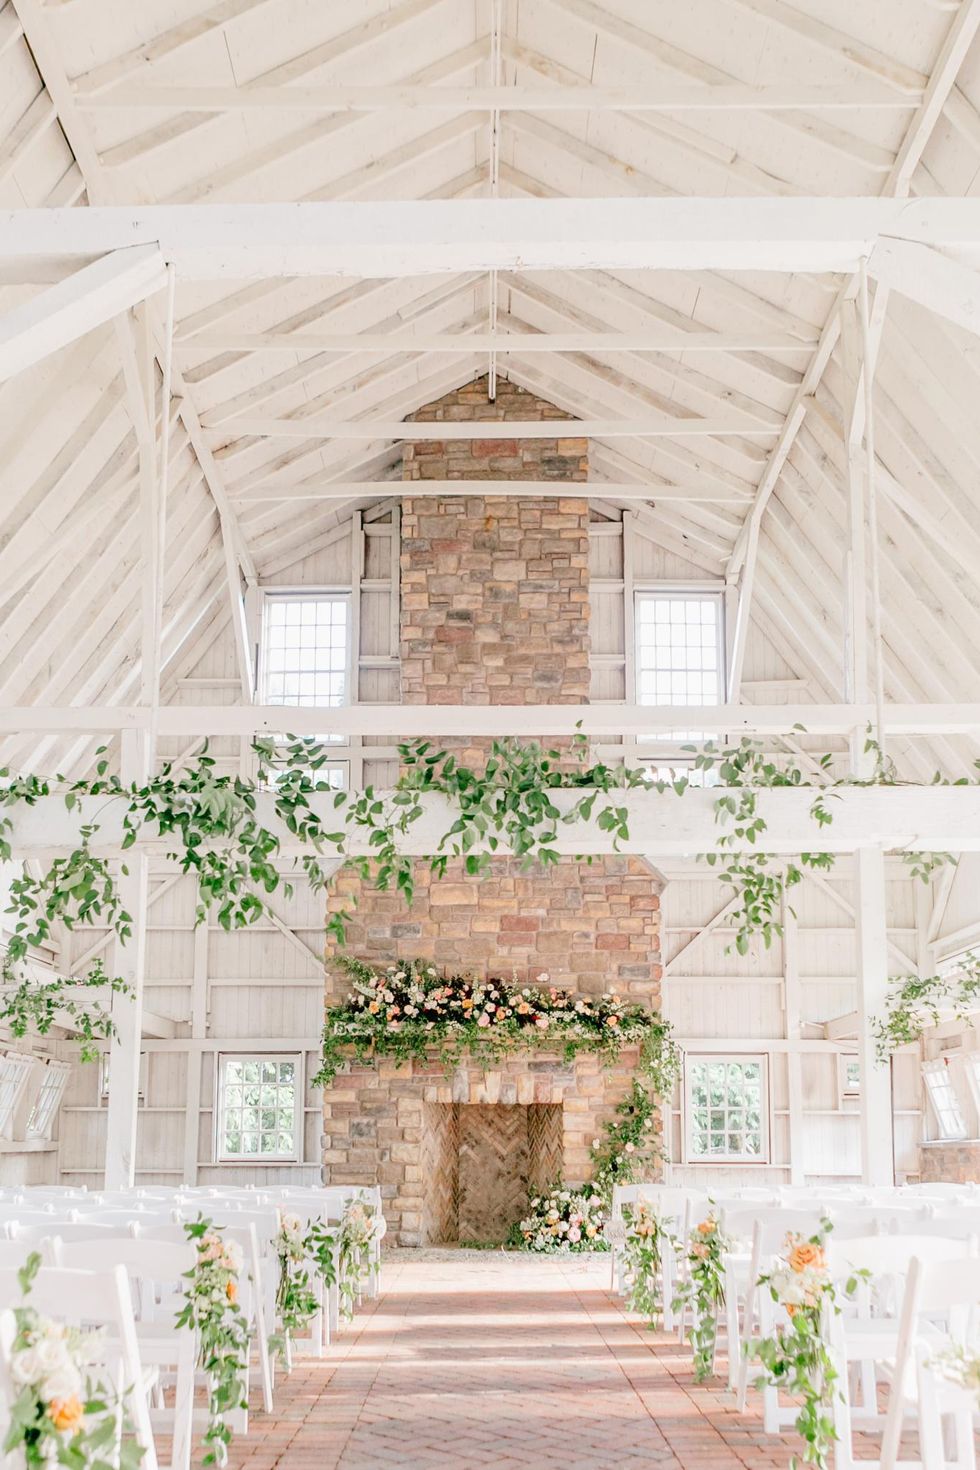 40 Rustic Barn Wedding Venues - Charming Country Wedding Venues